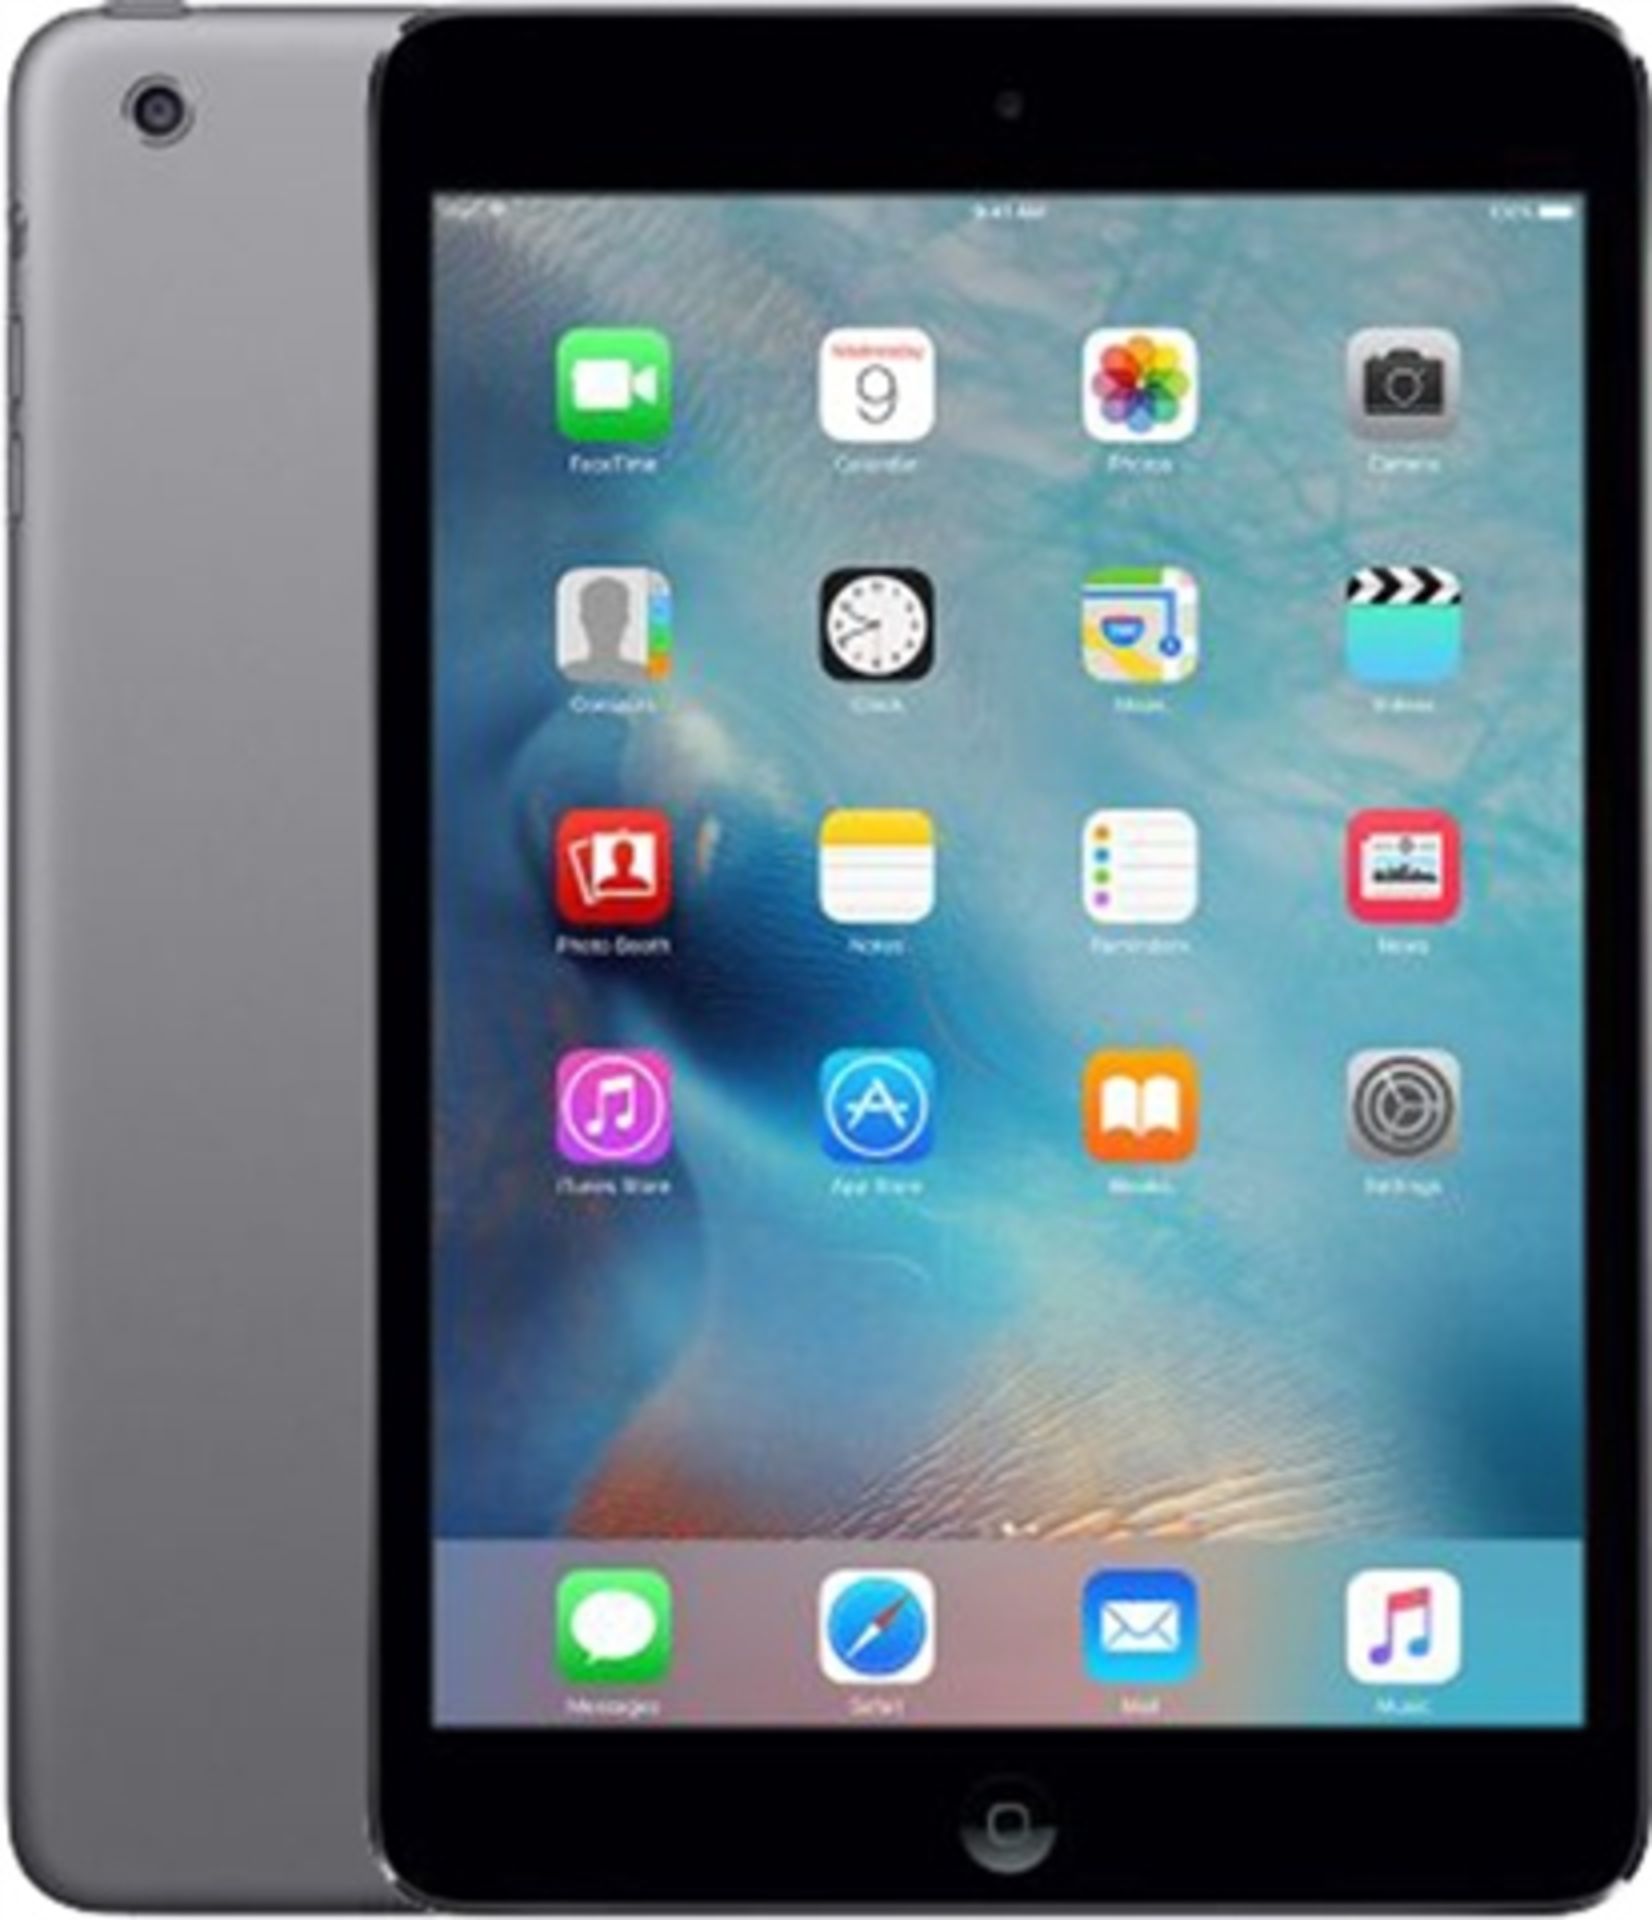 V Grade B Apple iPad Mini 2 16GB Space Grey - with Original box and accessories